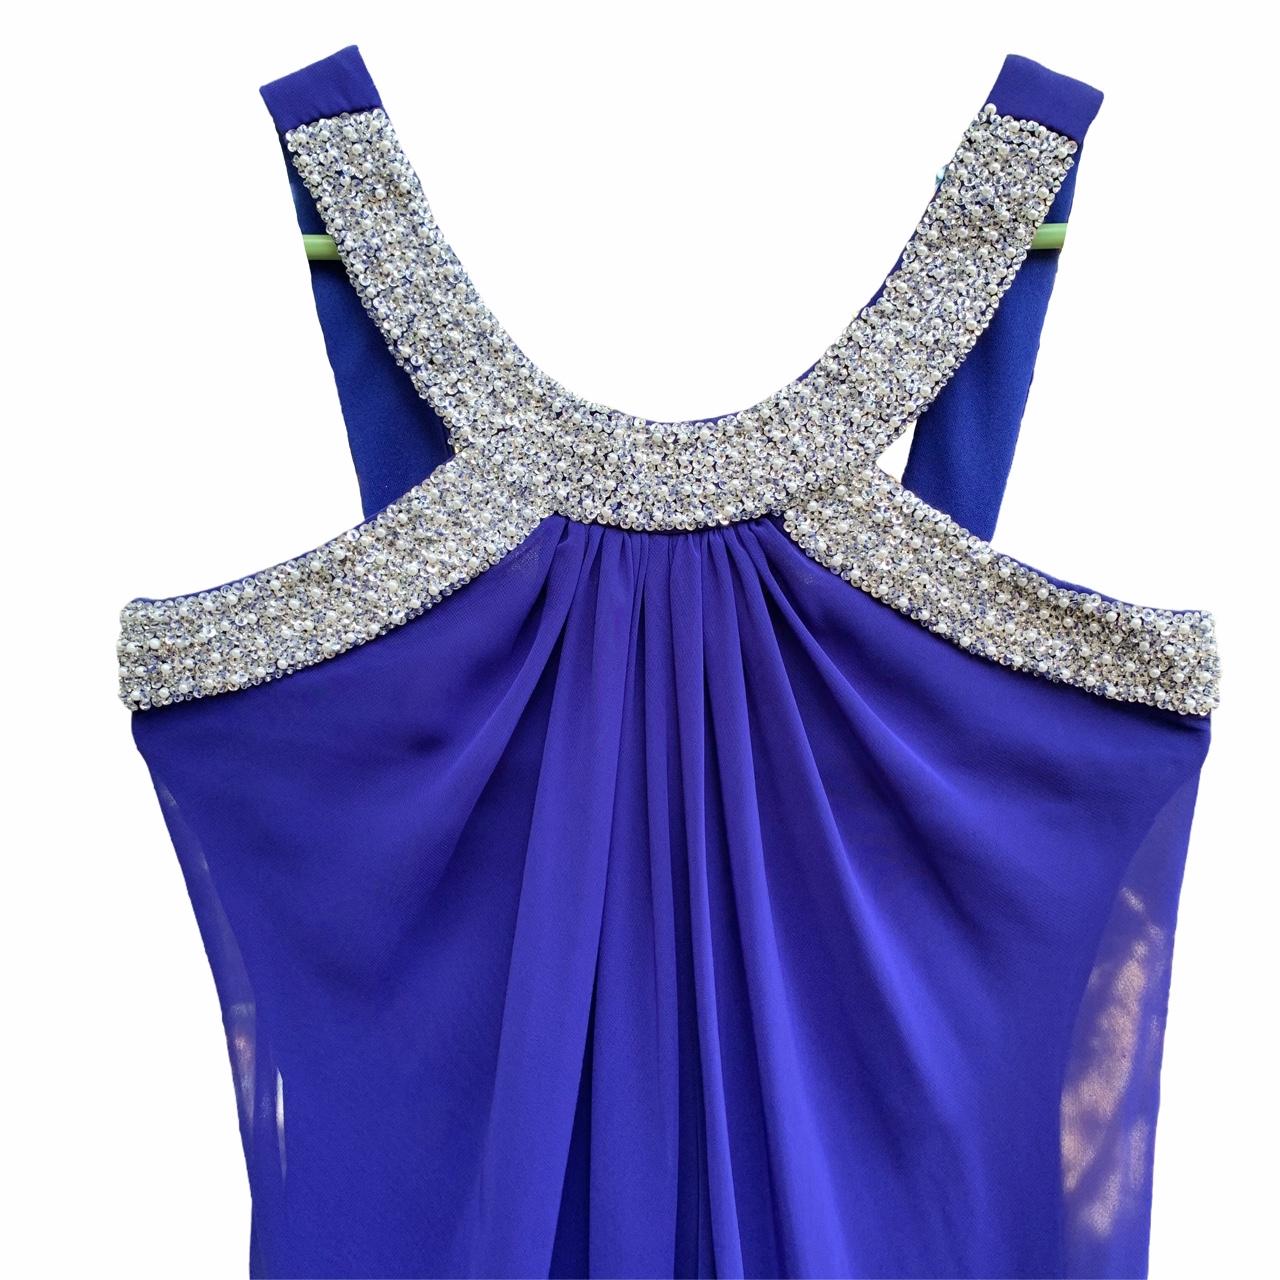 Product Image 2 - Stunning cobalt/royal blue cocktail/prom dress